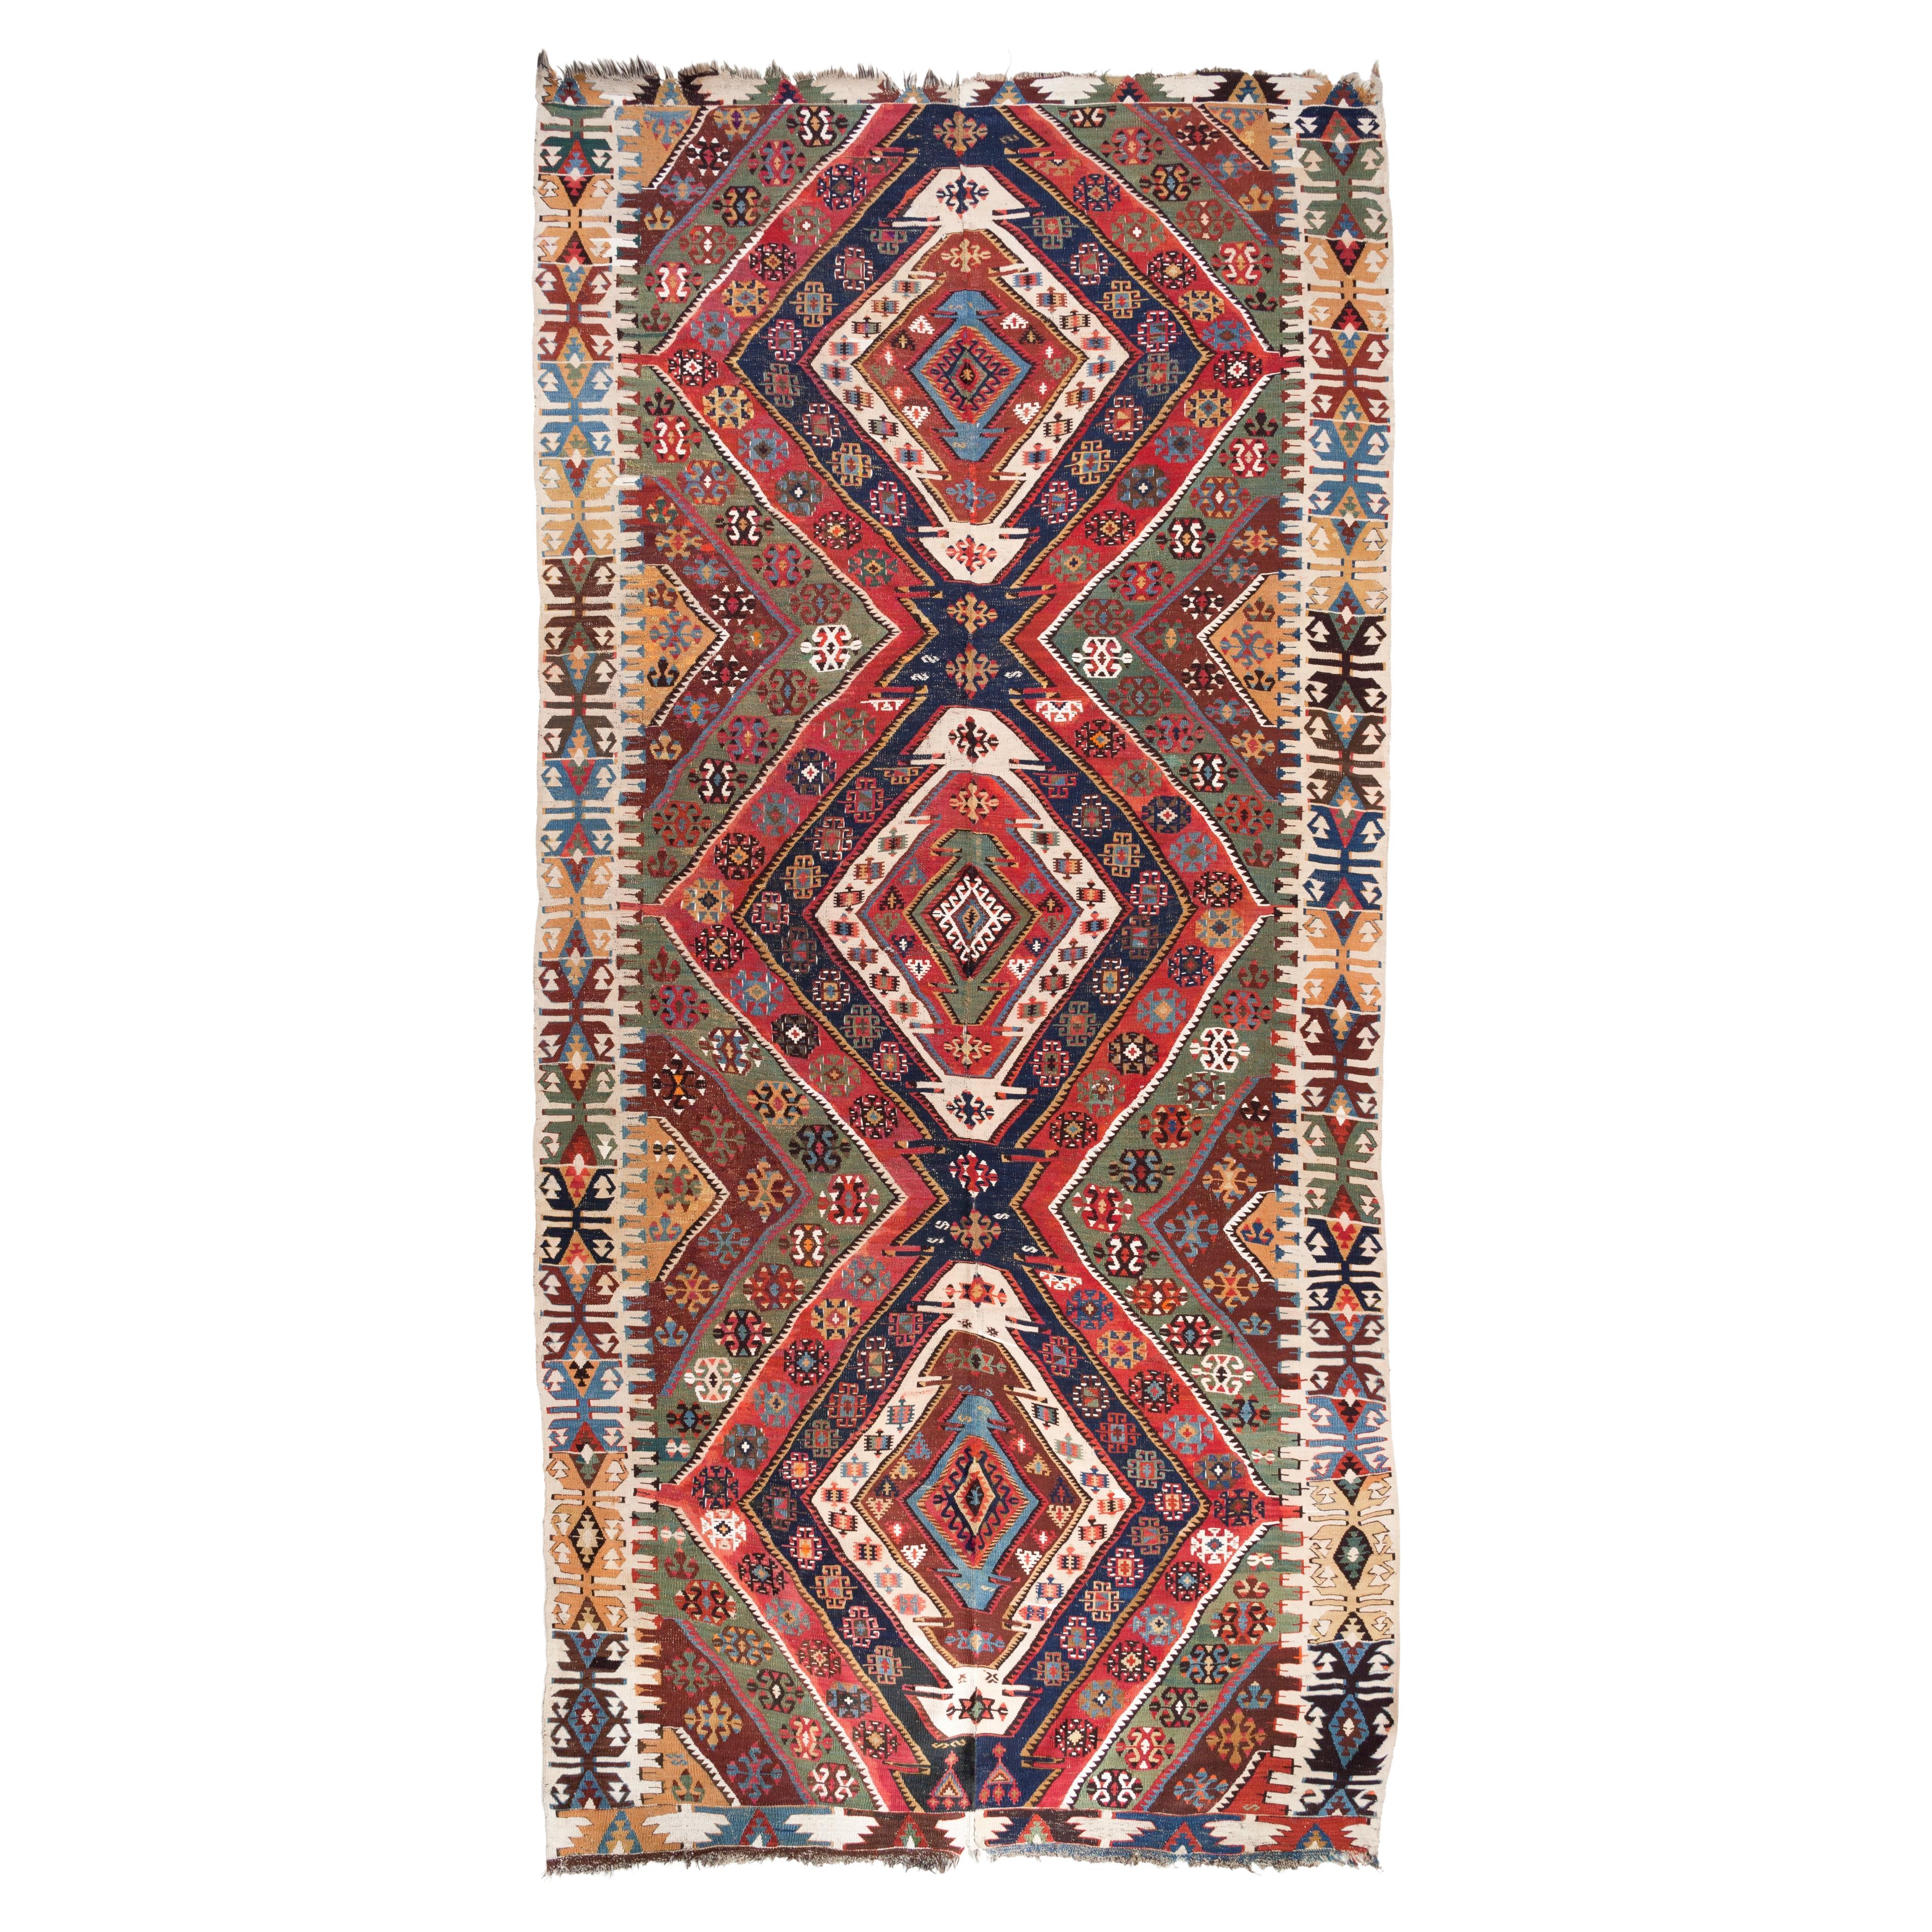 Antique Kayseri Kilim Central Anatolia Rug Turkish Carpet